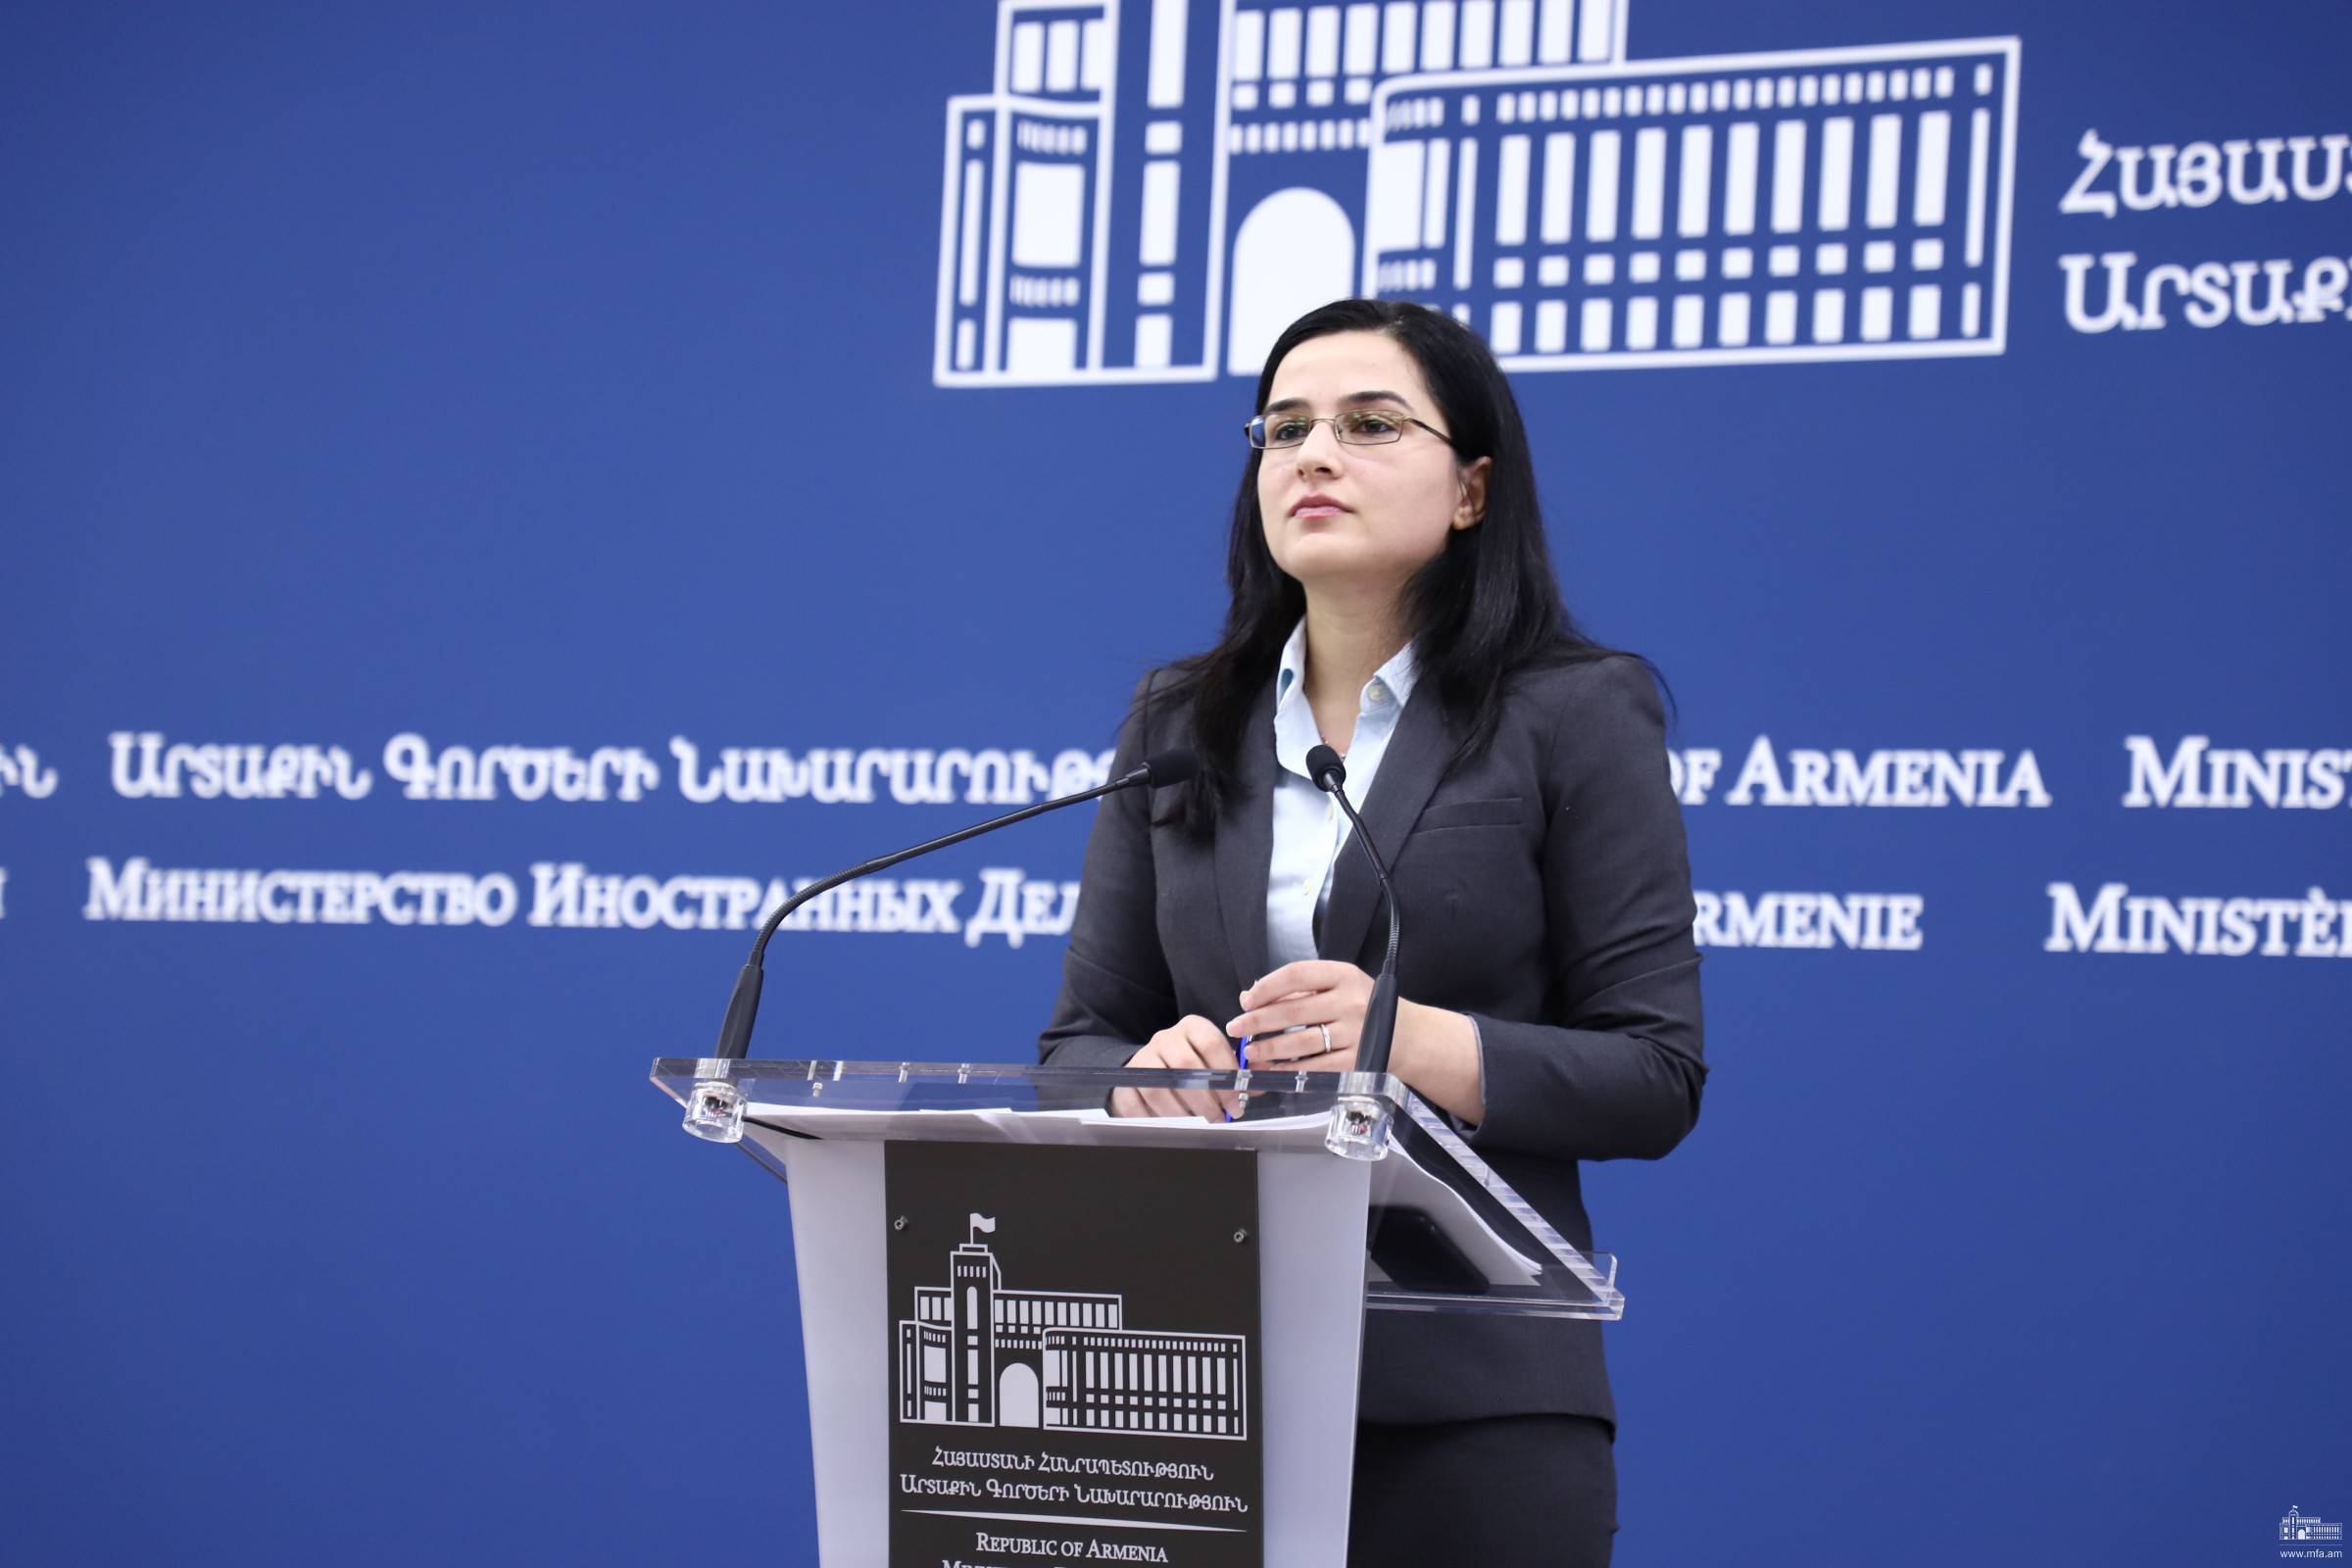 Сопредседатели сделали предложение о проведении встречи глав МИД Армении и Азербайджана